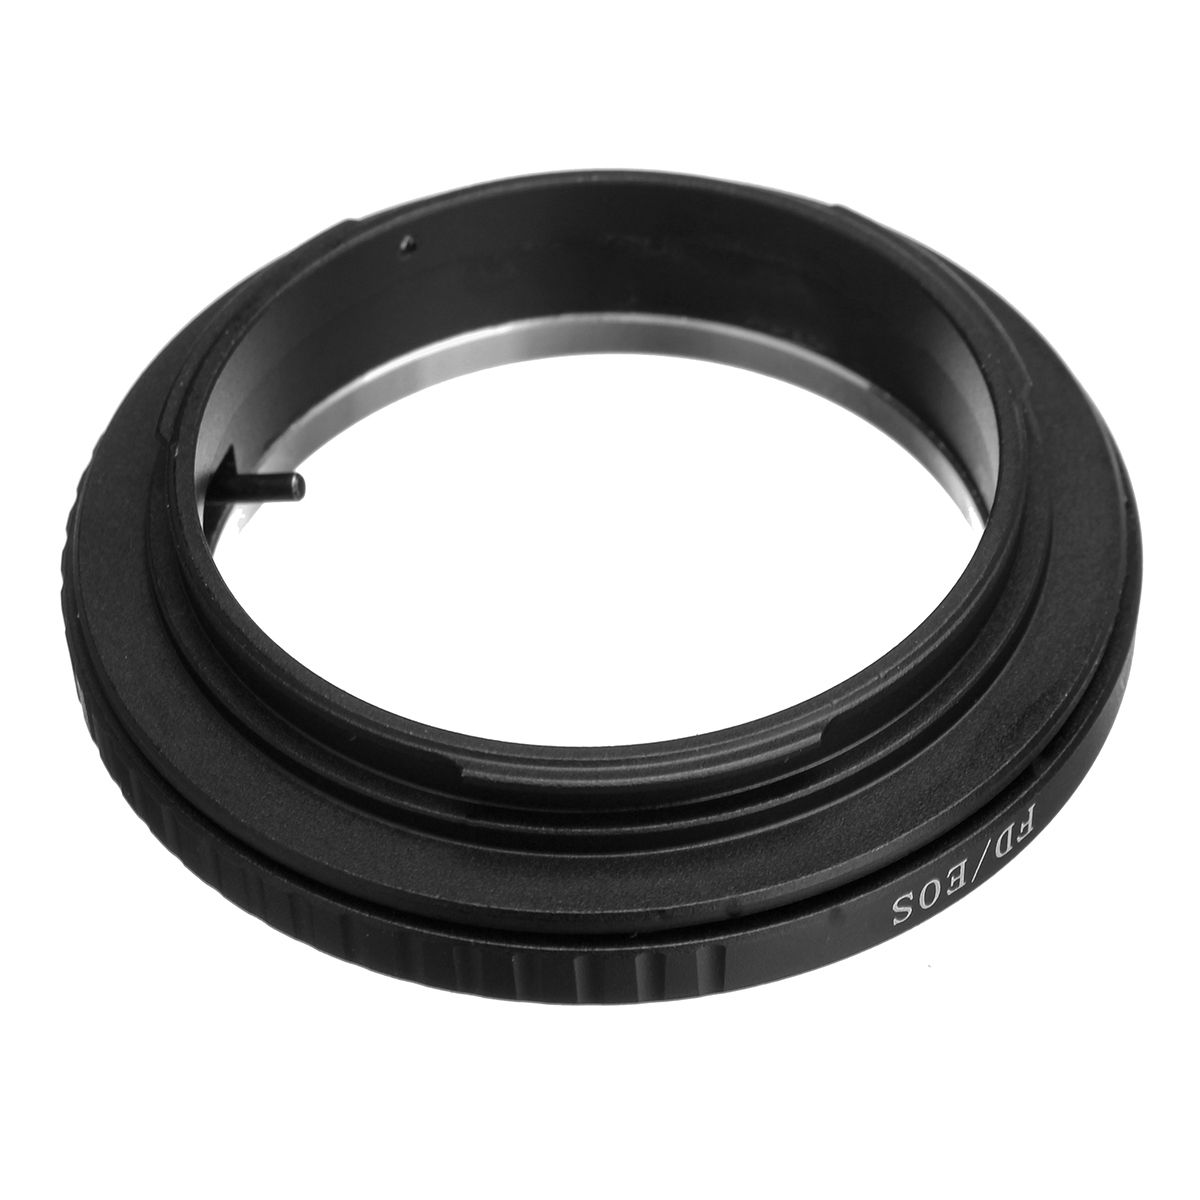 FD-EOS-Lens-Mount-Adapter-FD-Lens-to-EOS-Body-Camera-Lens-Adapter-for-Canon-Cameras-1734699